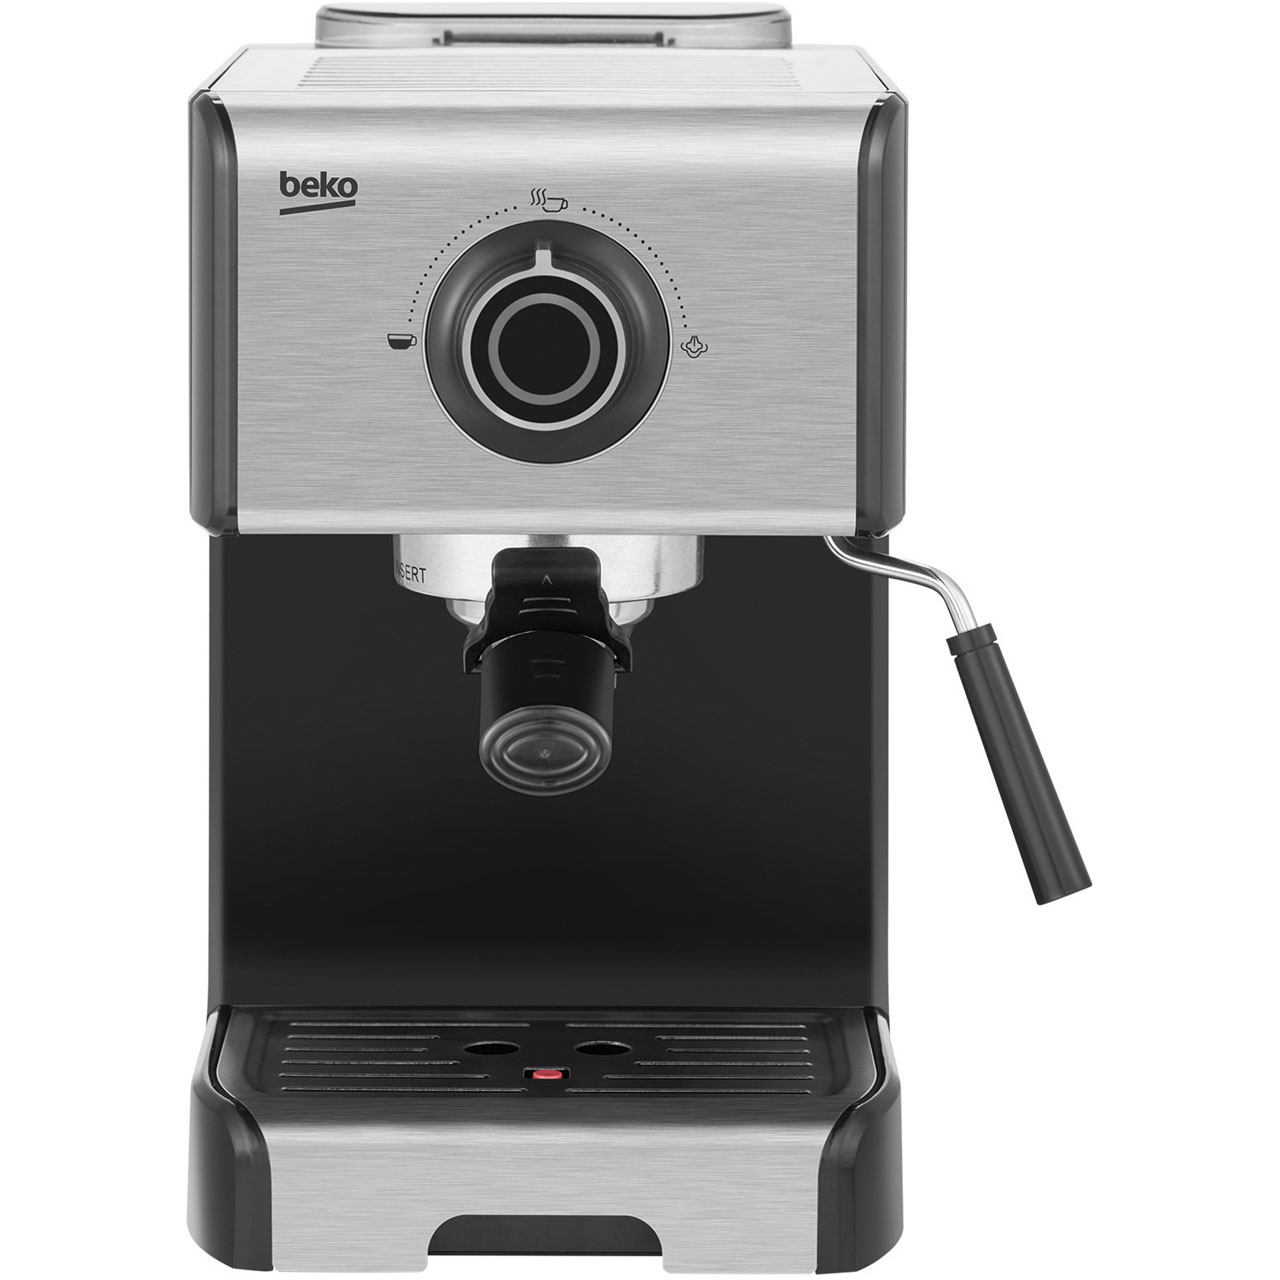 Beko CEP5152B Espresso Coffee Machine Review